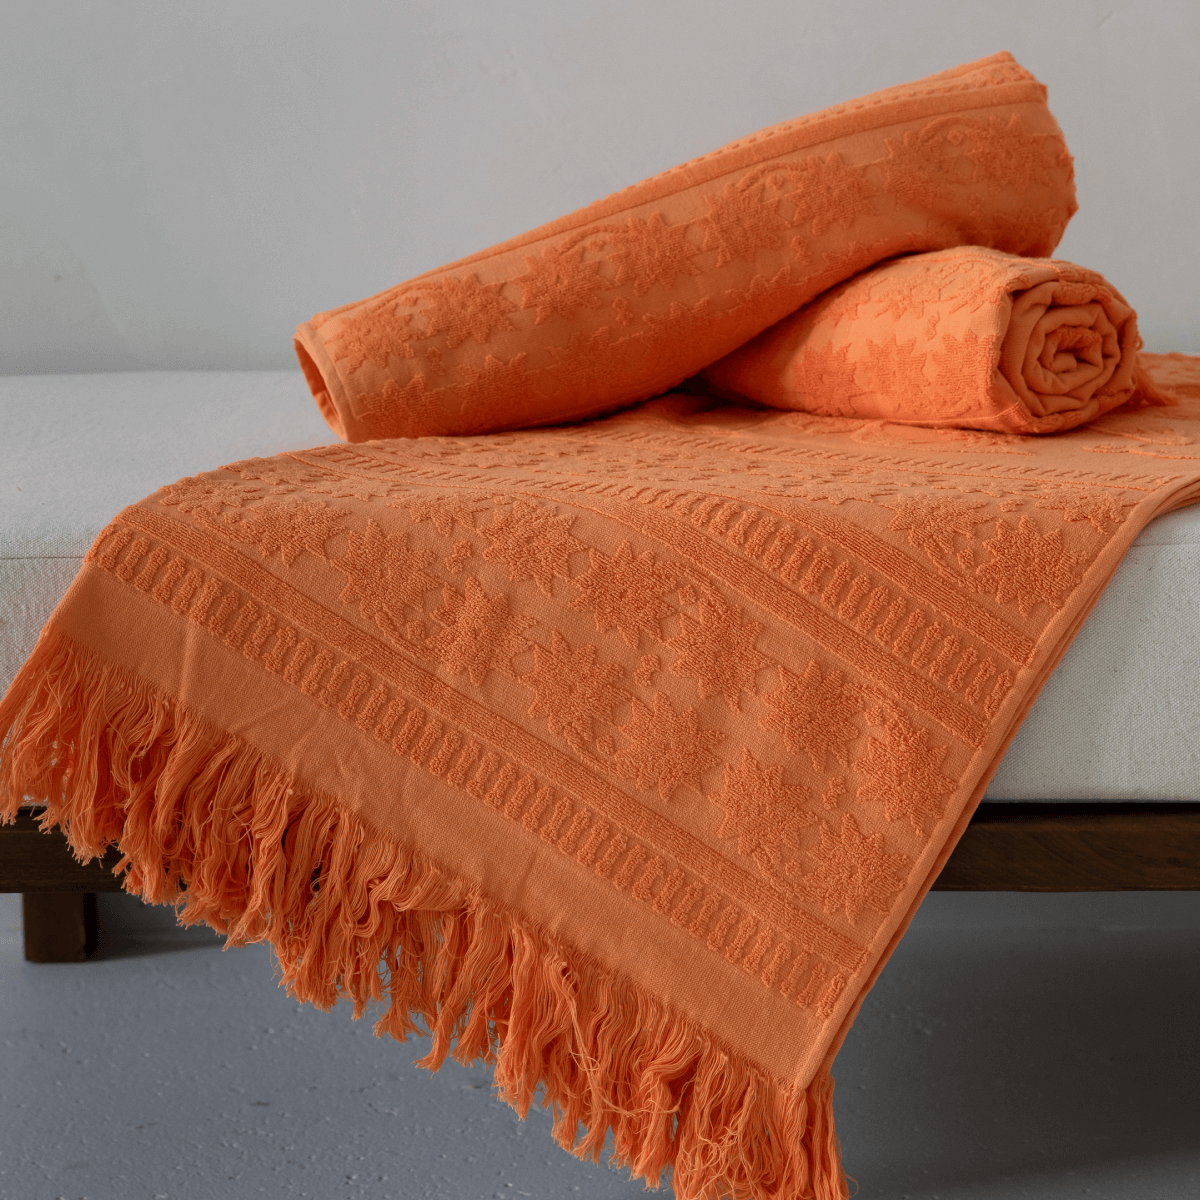 Moroccan Bath Towel - Tangerine